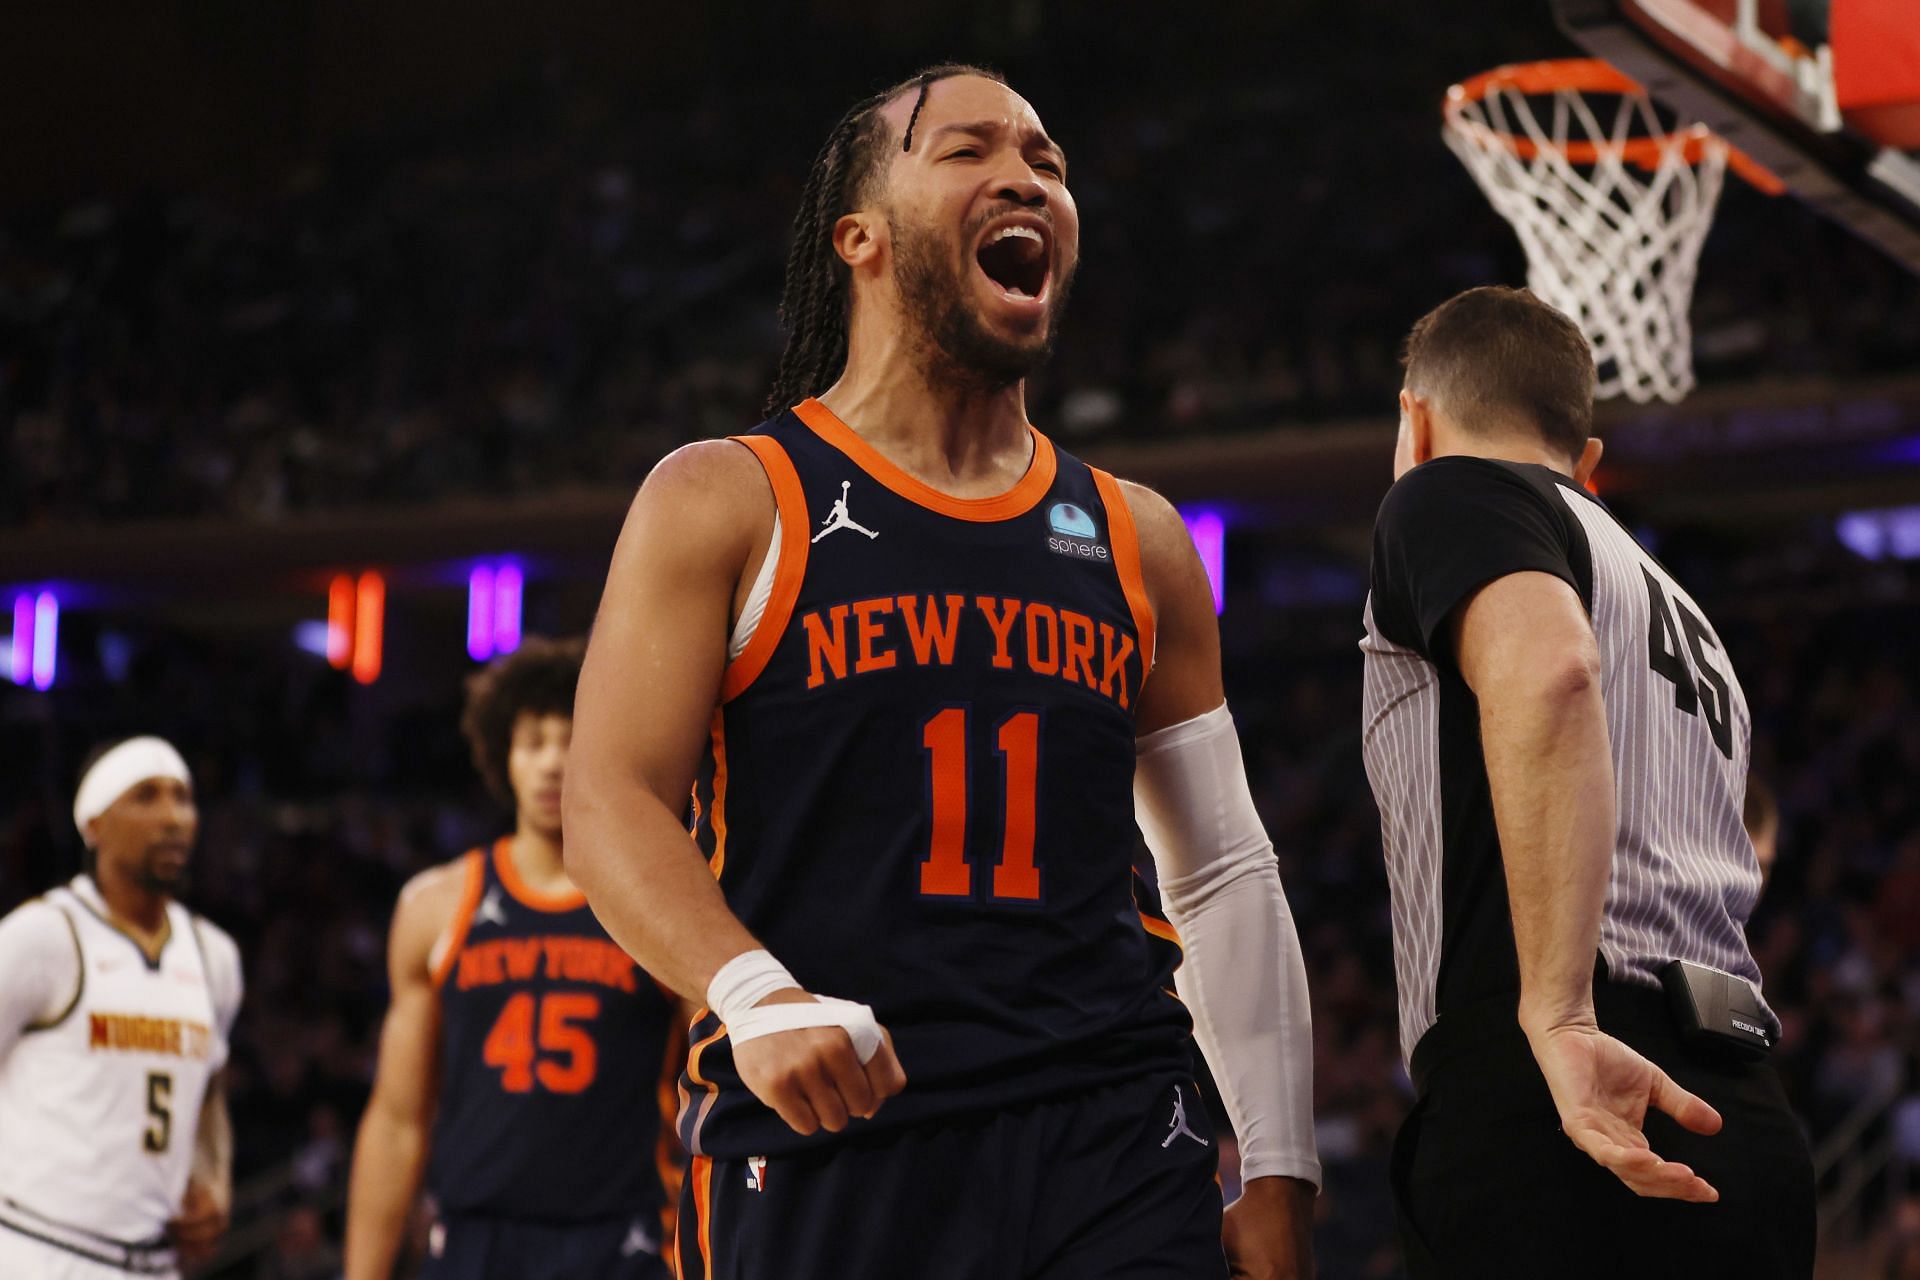 Denver Nuggets v New York Knicks